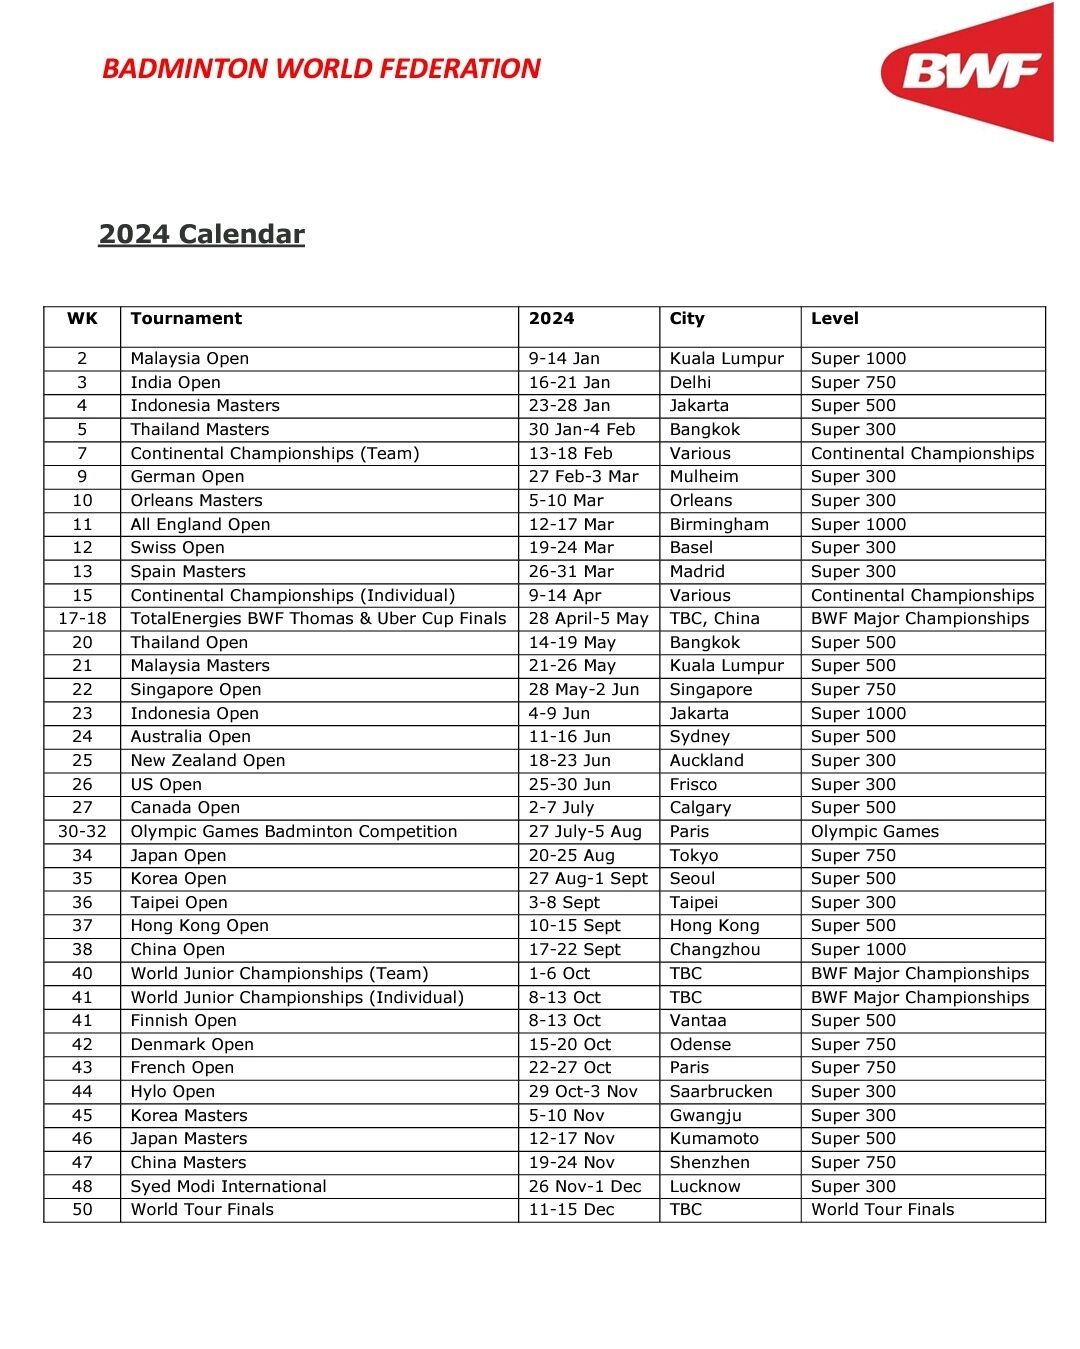 Badminton calendar for 2023-24 released; Paris Olympics qualifiers announced